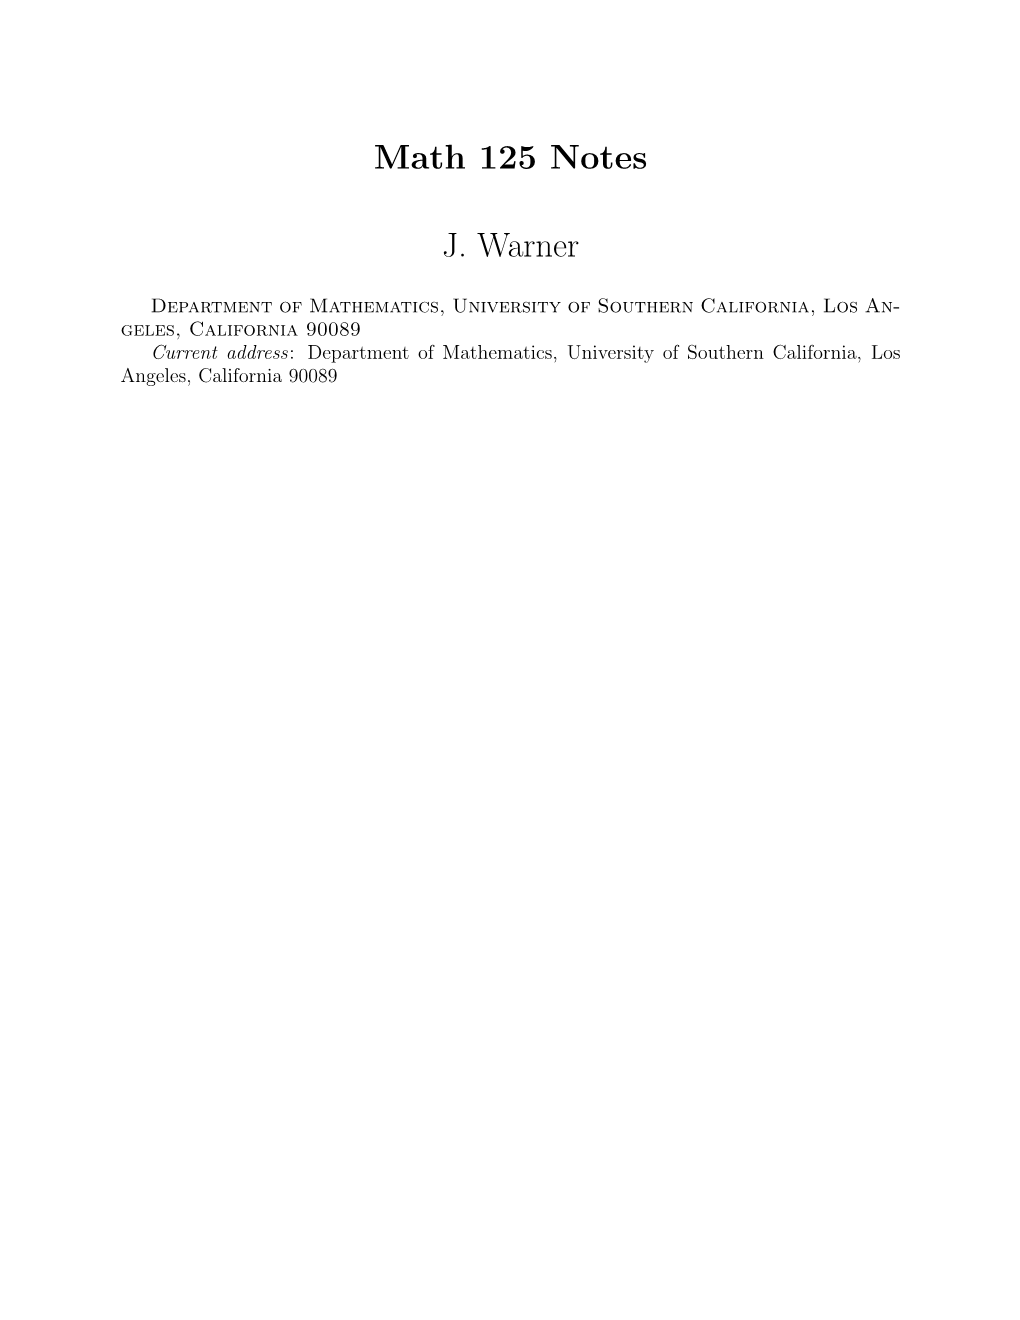 Math 125 Notes J. Warner